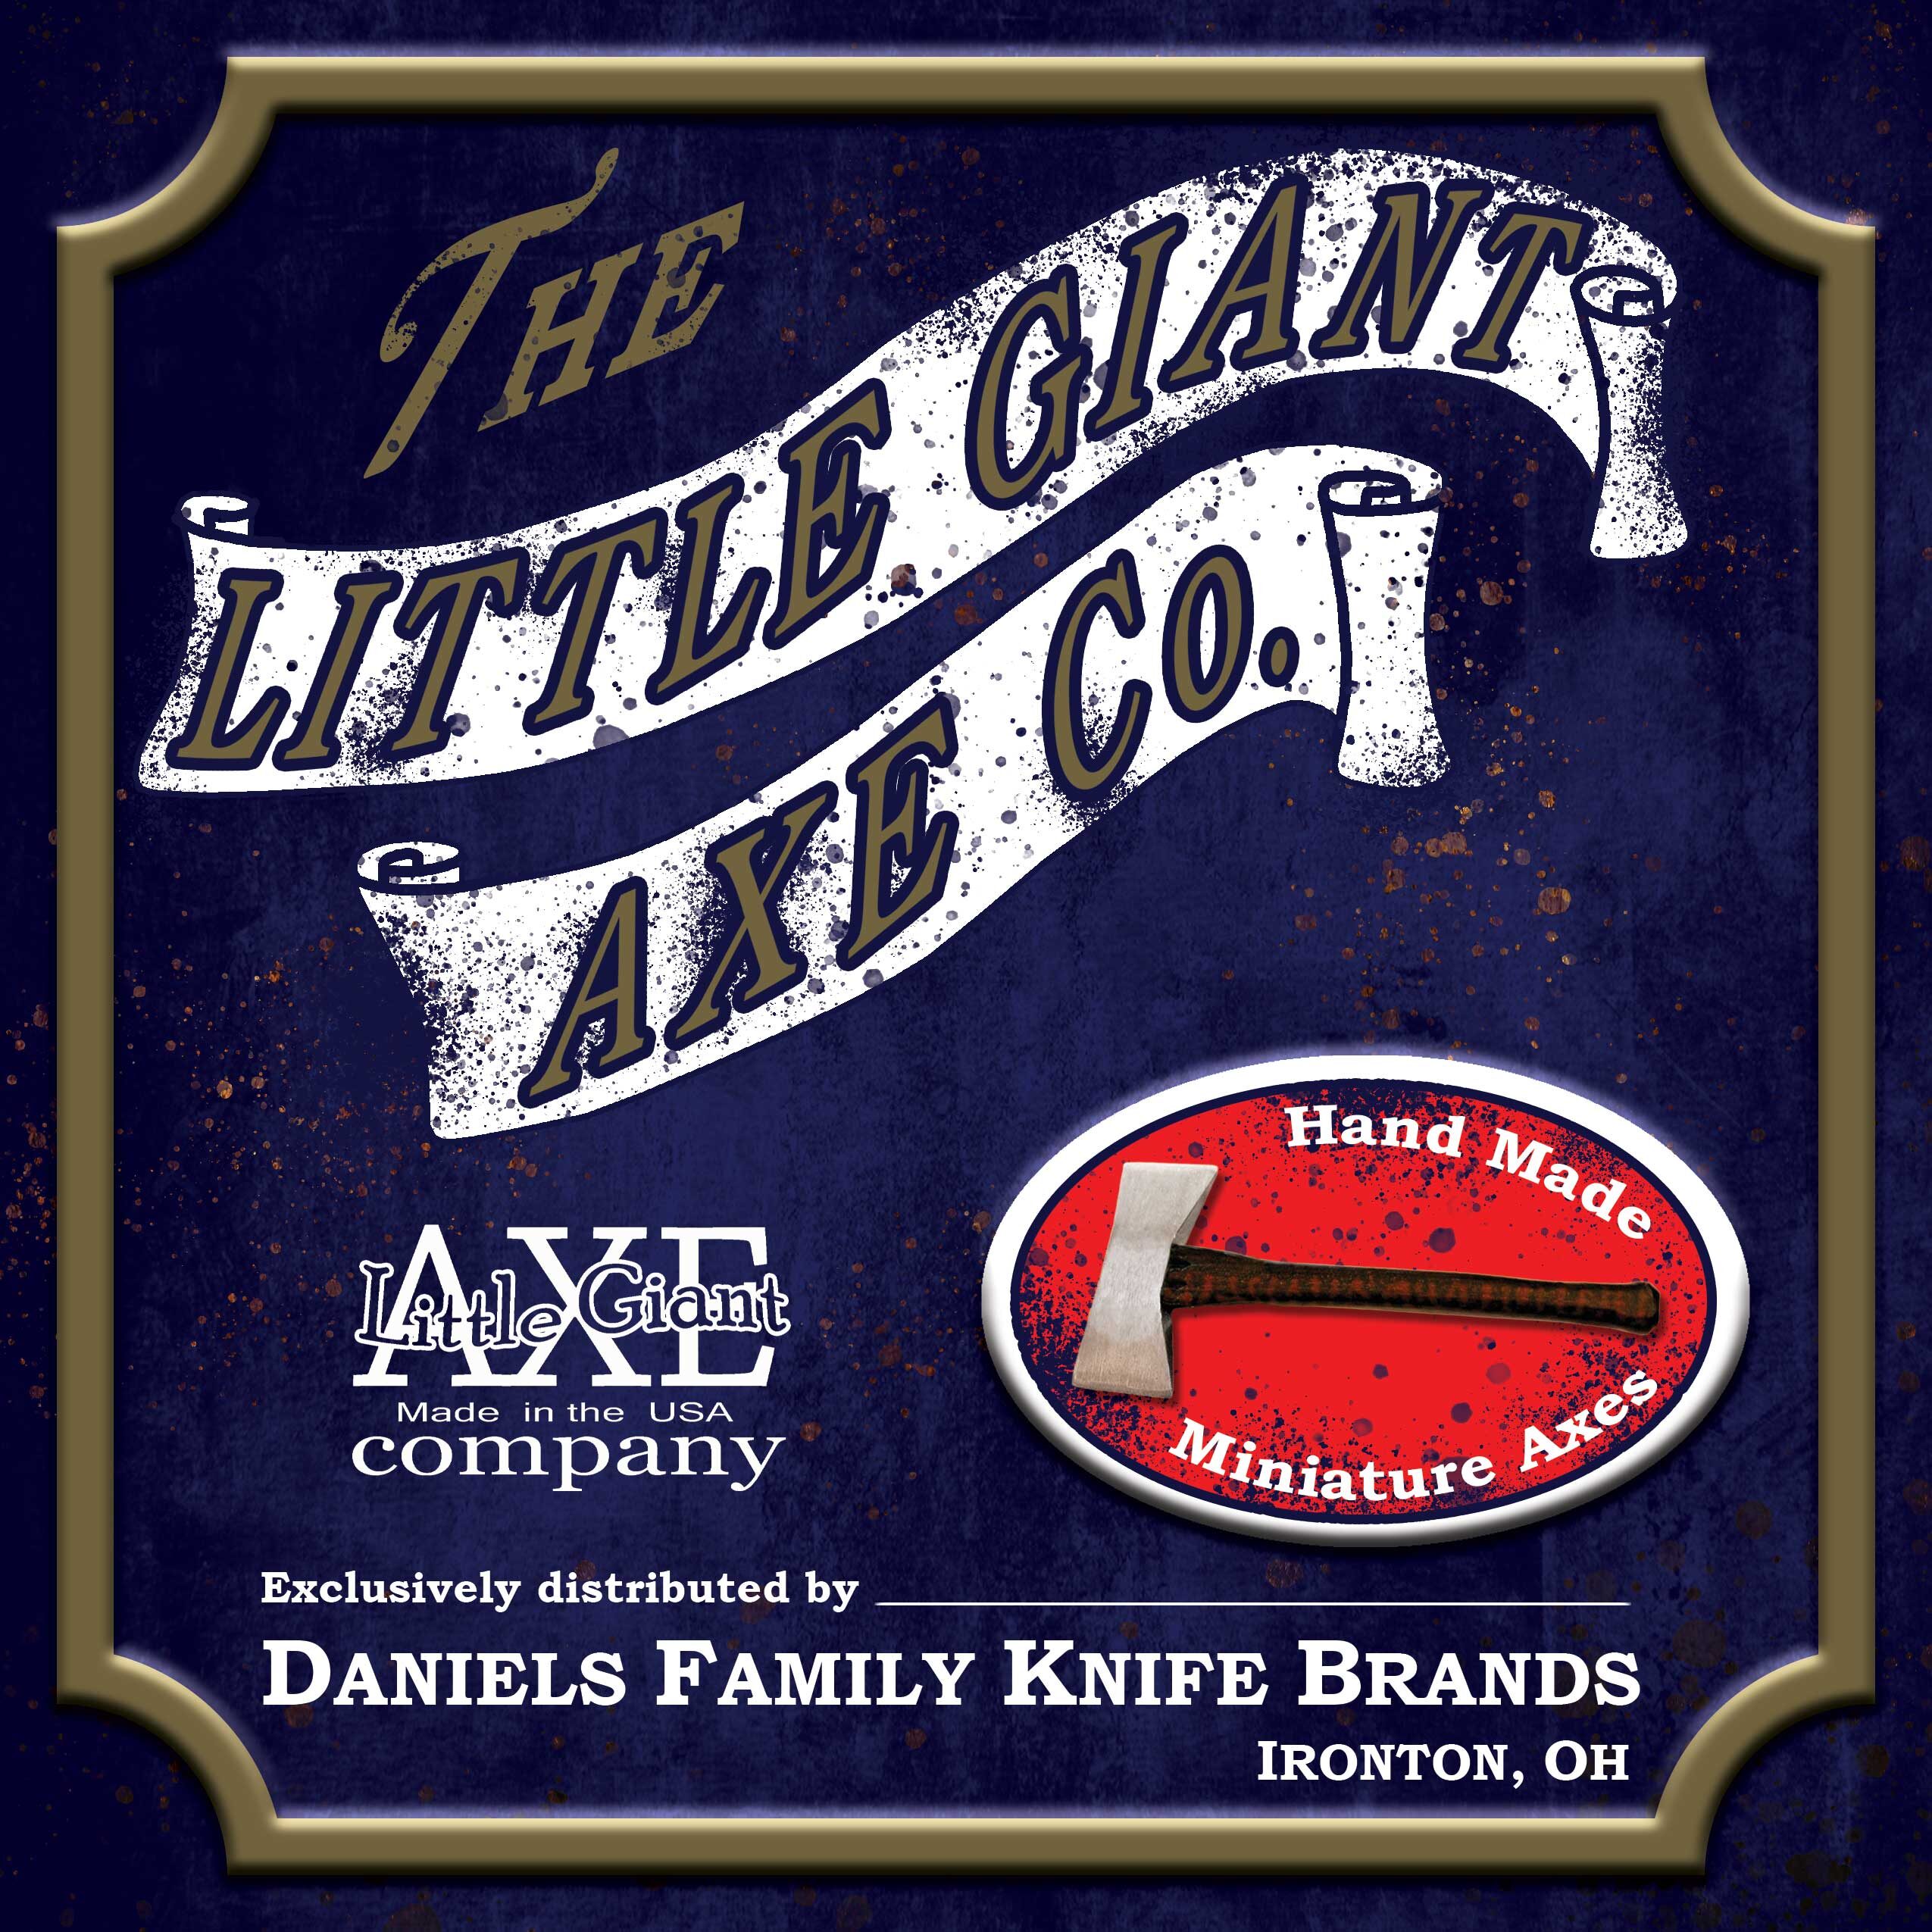 Little Giant Axe Co. logo ad